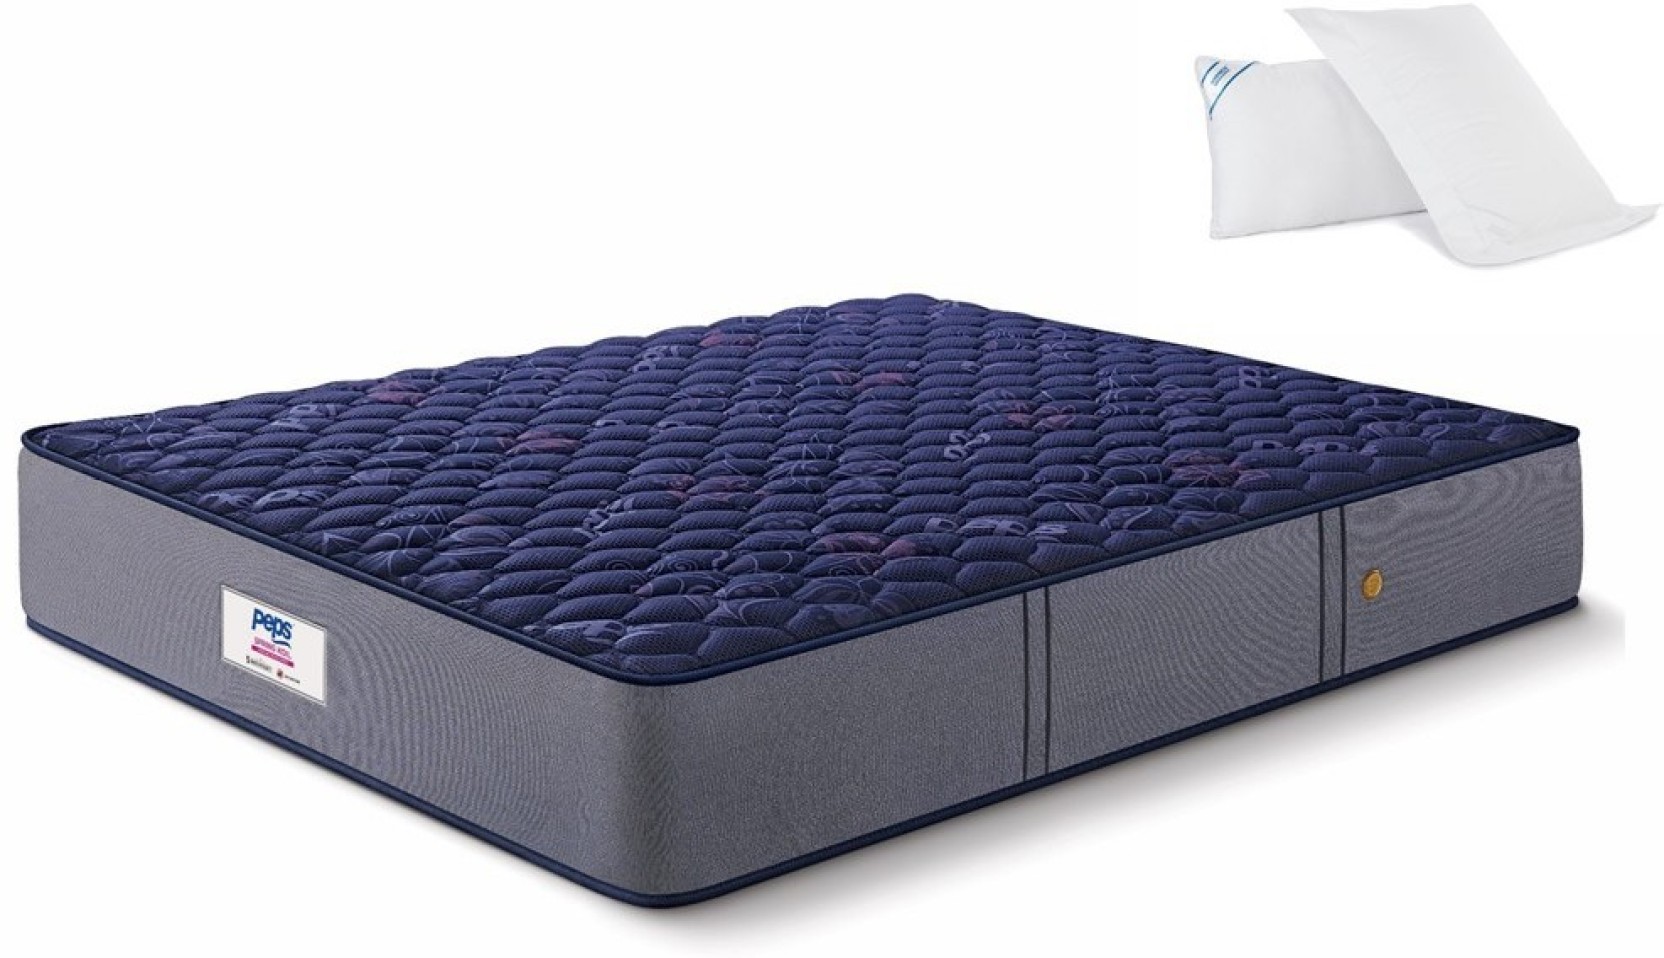 peps restonic mattress price in india